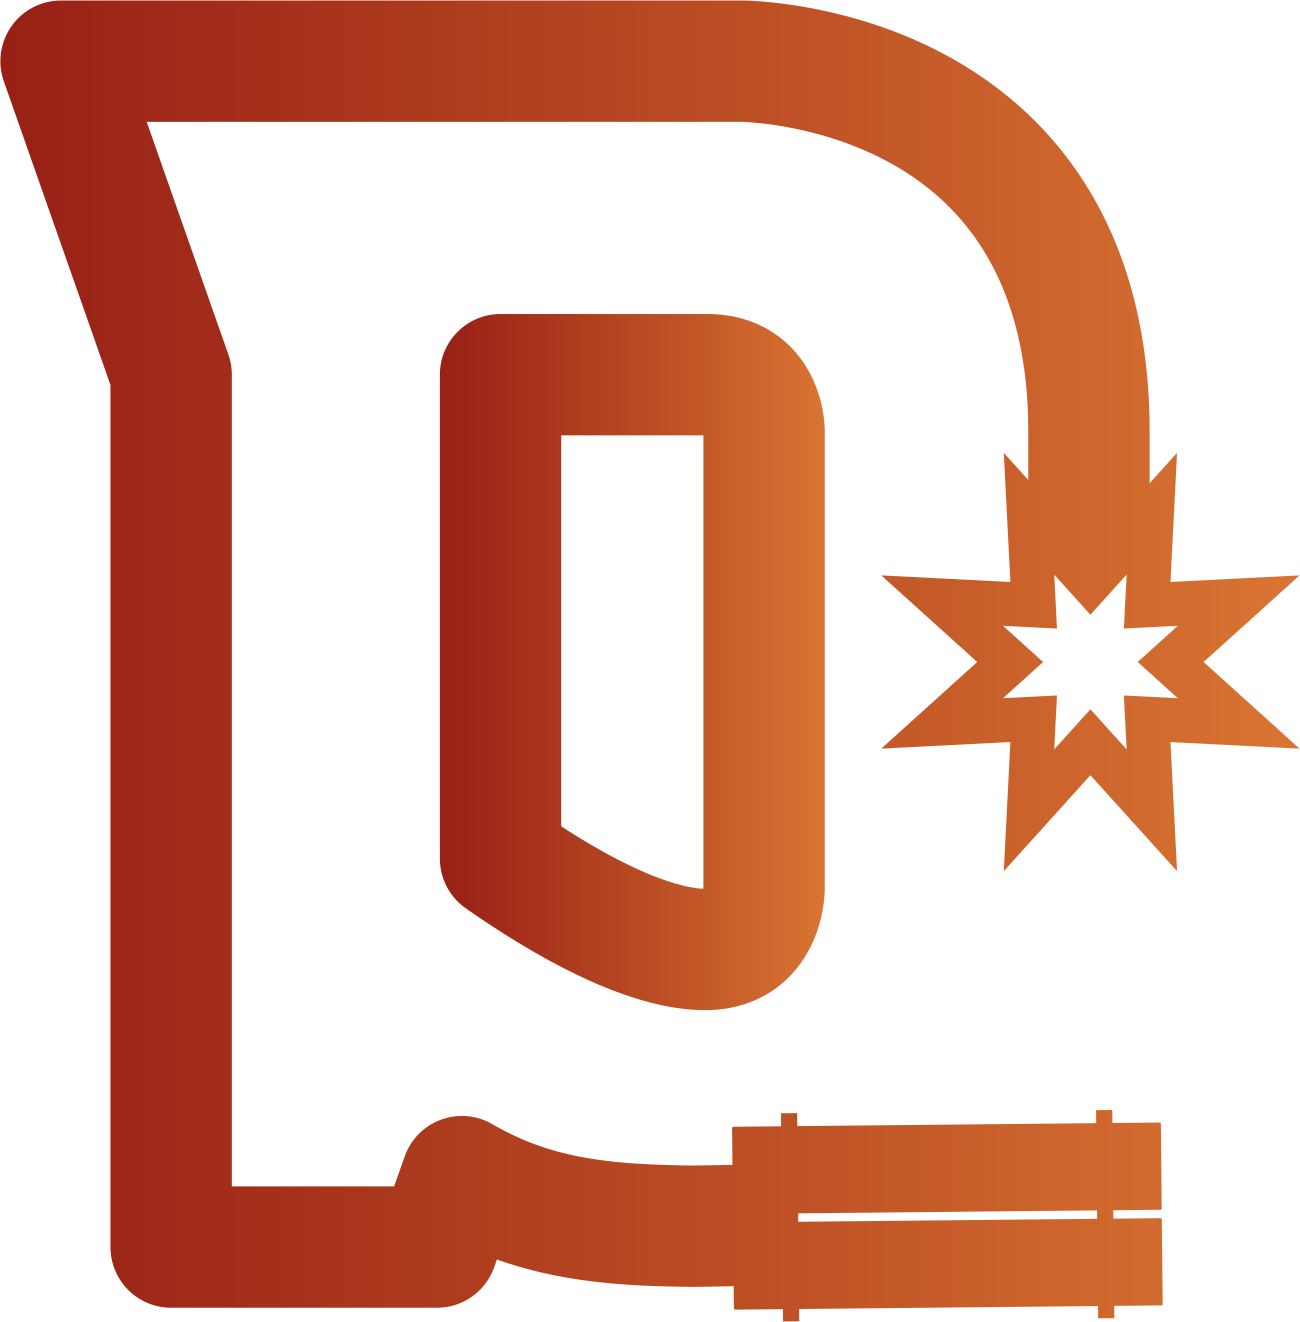 Team's logo